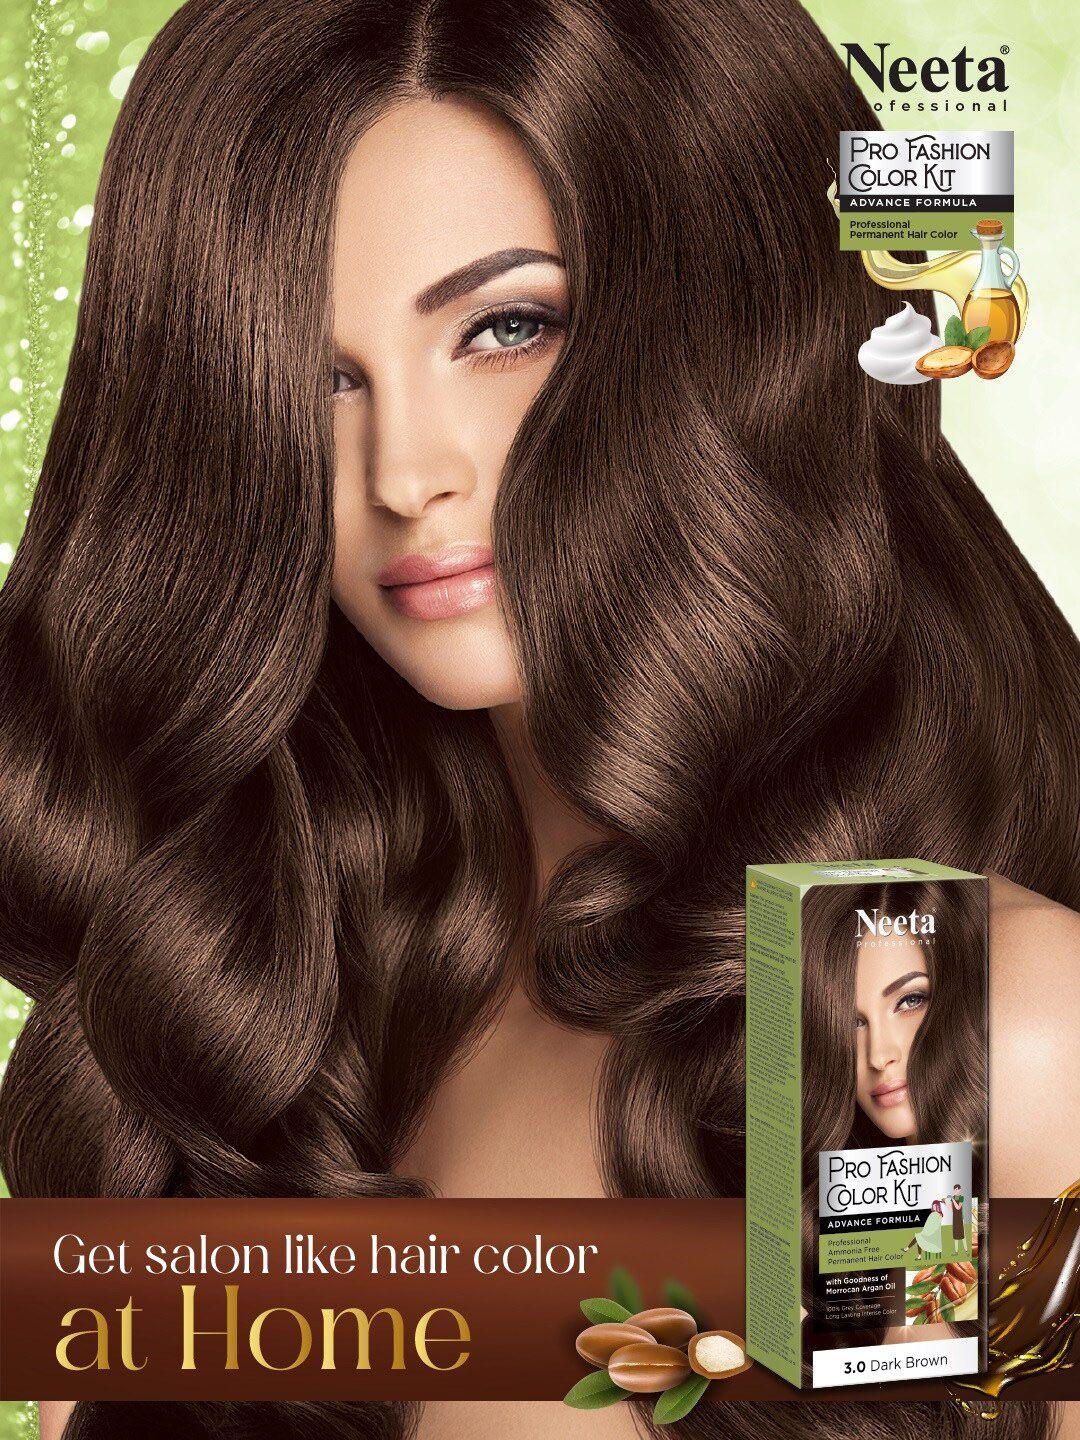 neeta professional pro fashion permanent hair color kit 100g - dark brown 3.0